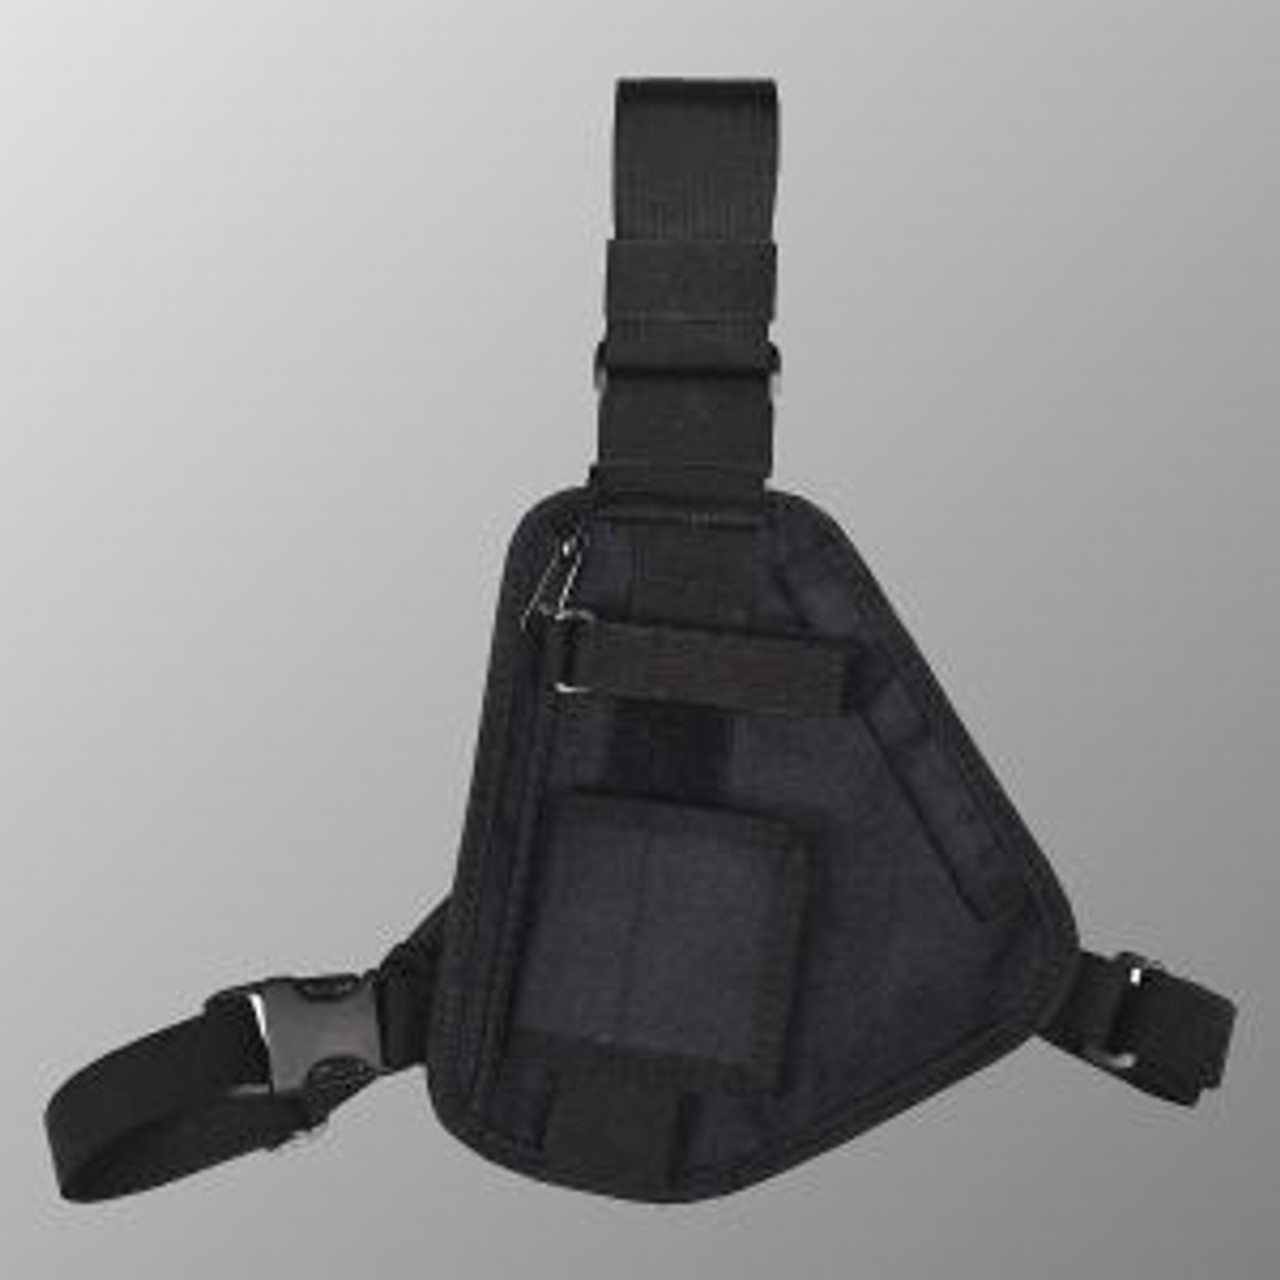 ICOM IC-F9021S 3-Point Chest Harness - Black